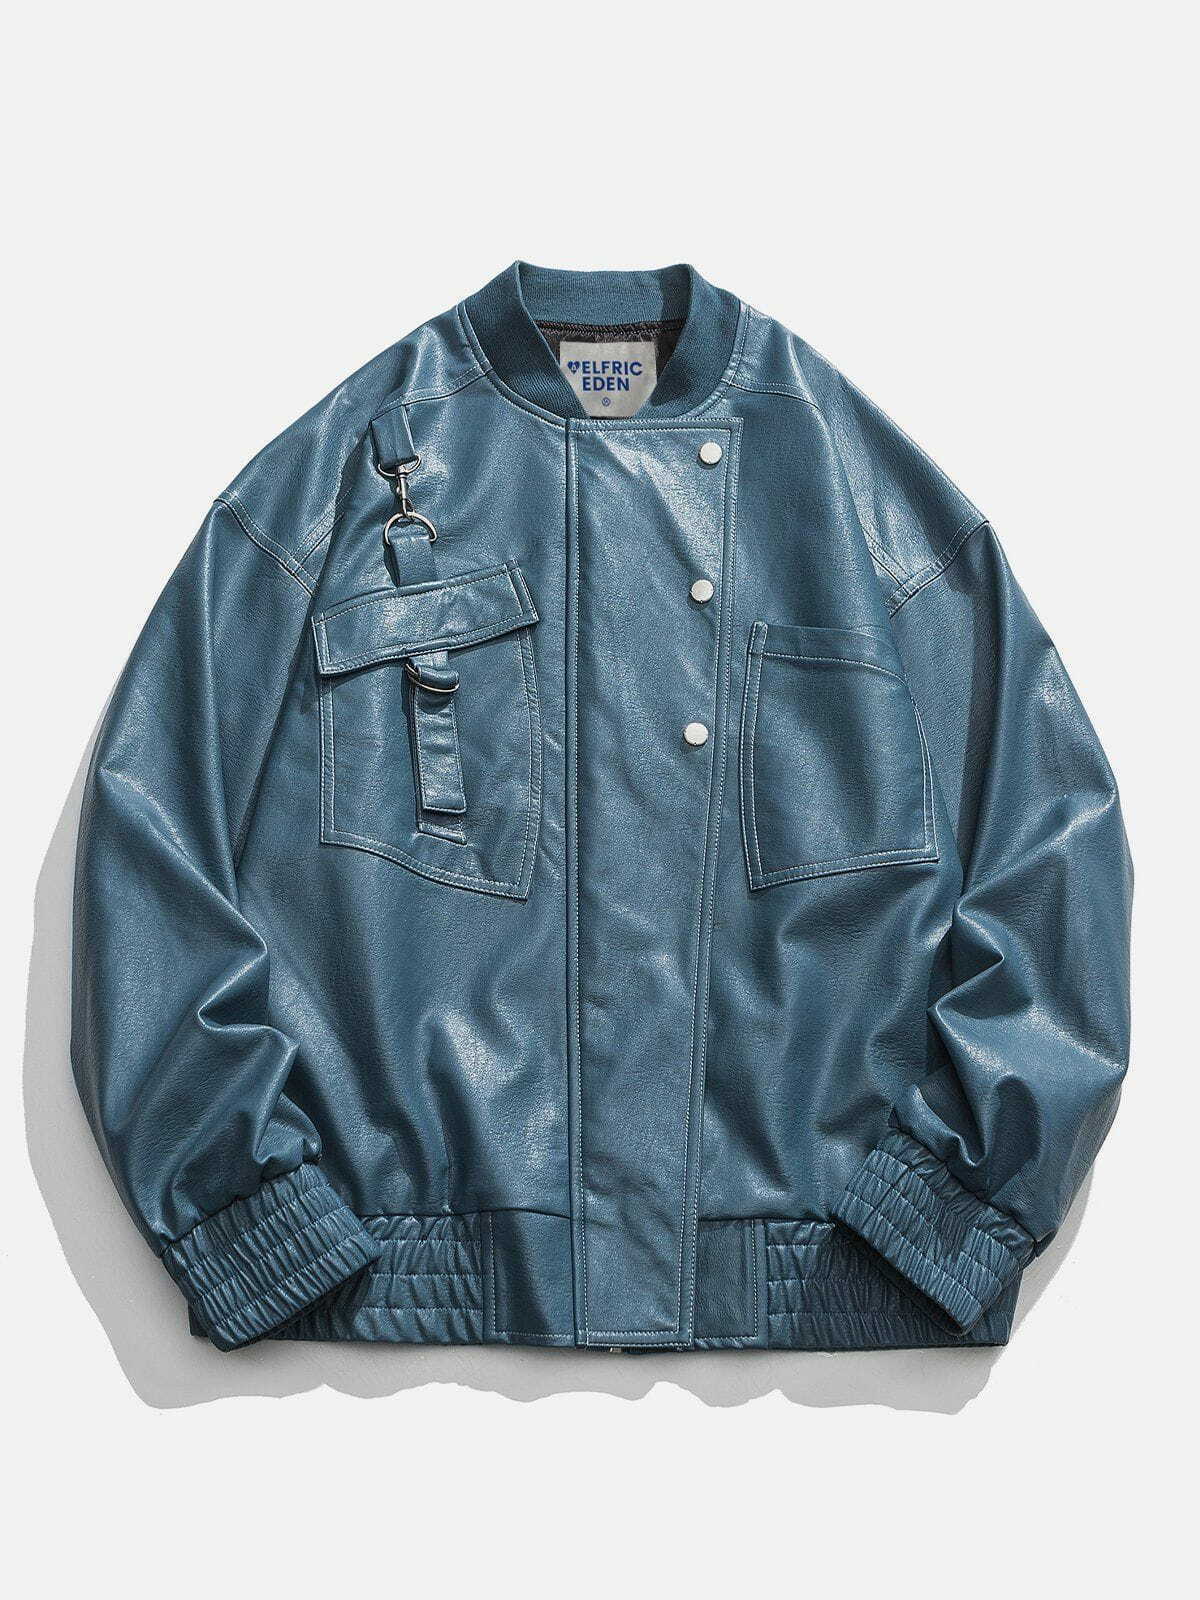 retro racer leather jacket bold & edgy streetwear 6185